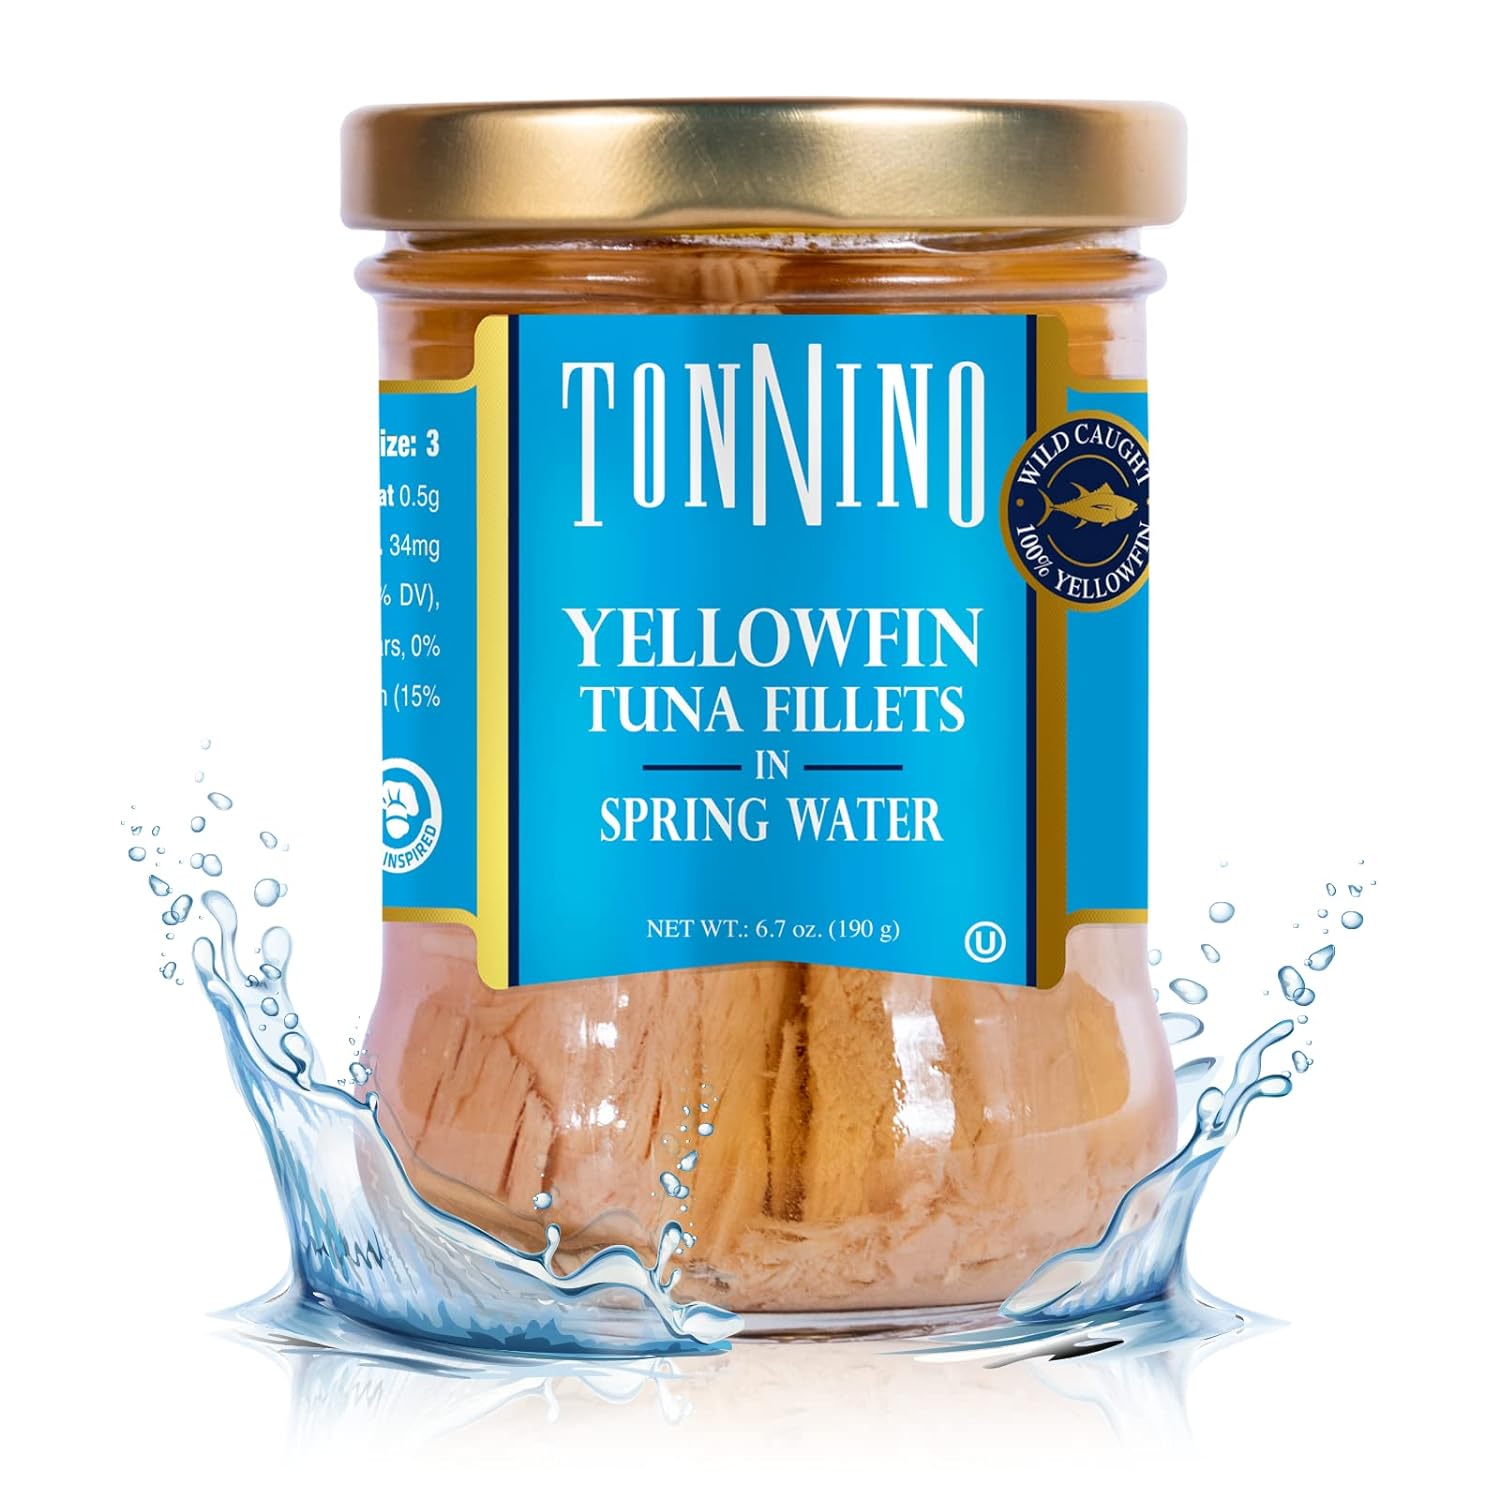 Tonnino Yellowfin Tuna in Water 6.7 oz - Gourmet 6-Pack: Omega-3, High Protein, Gluten-Free, Ready-to-Eat Tuna Packets for Tuna Salad, Tuna Fish Alternative to Salmon, Kosher, Perfect for tuna salad